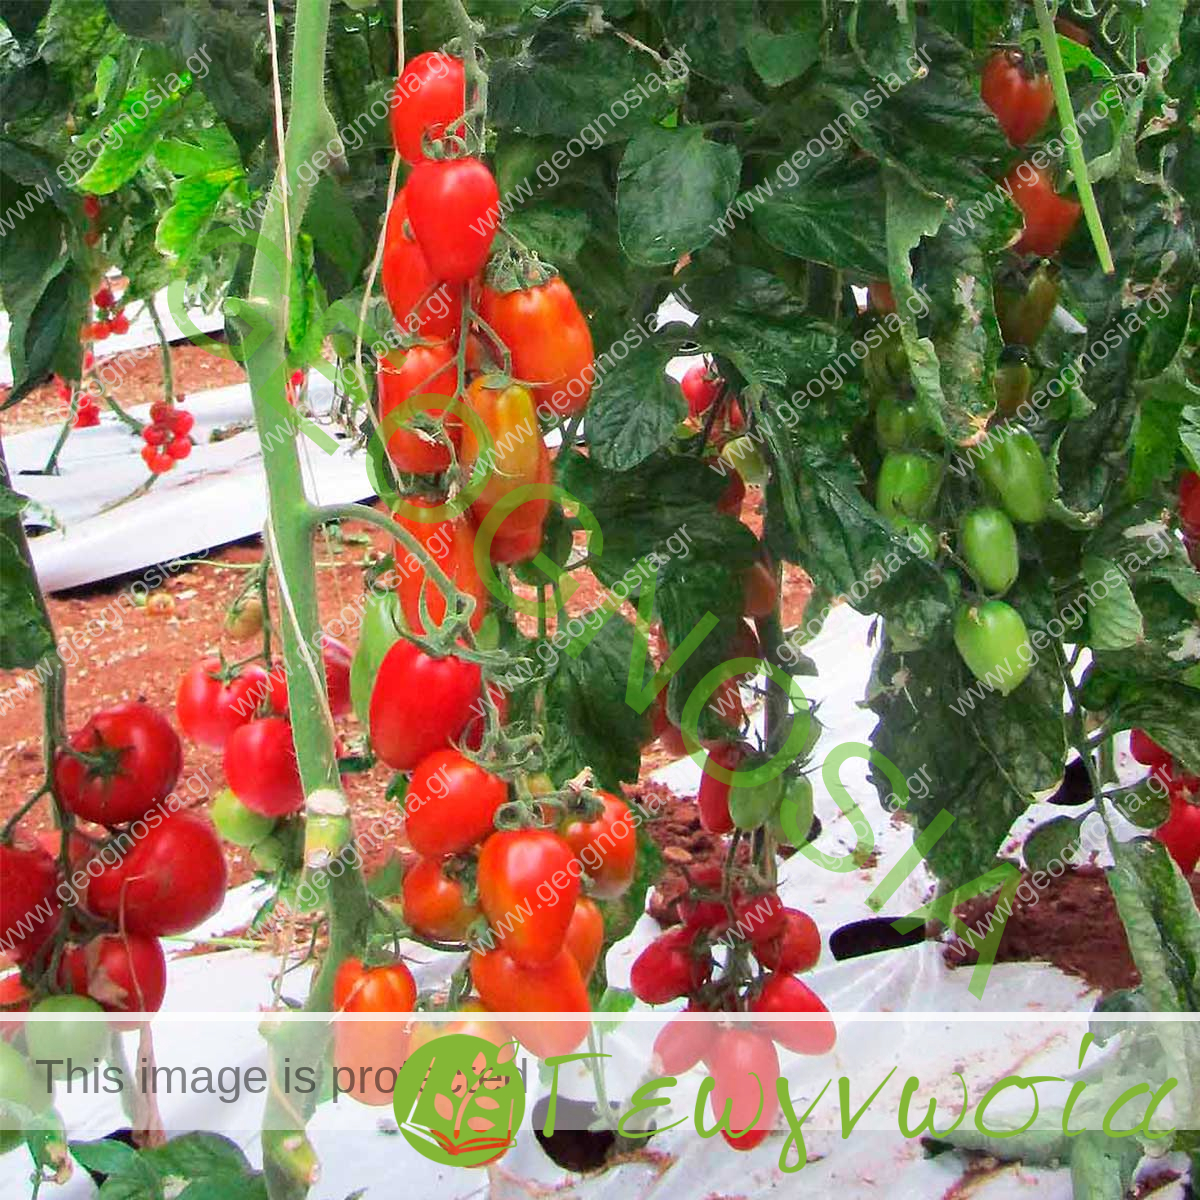 sporoi-tomatas-zucchello-f1-unigen-seeds